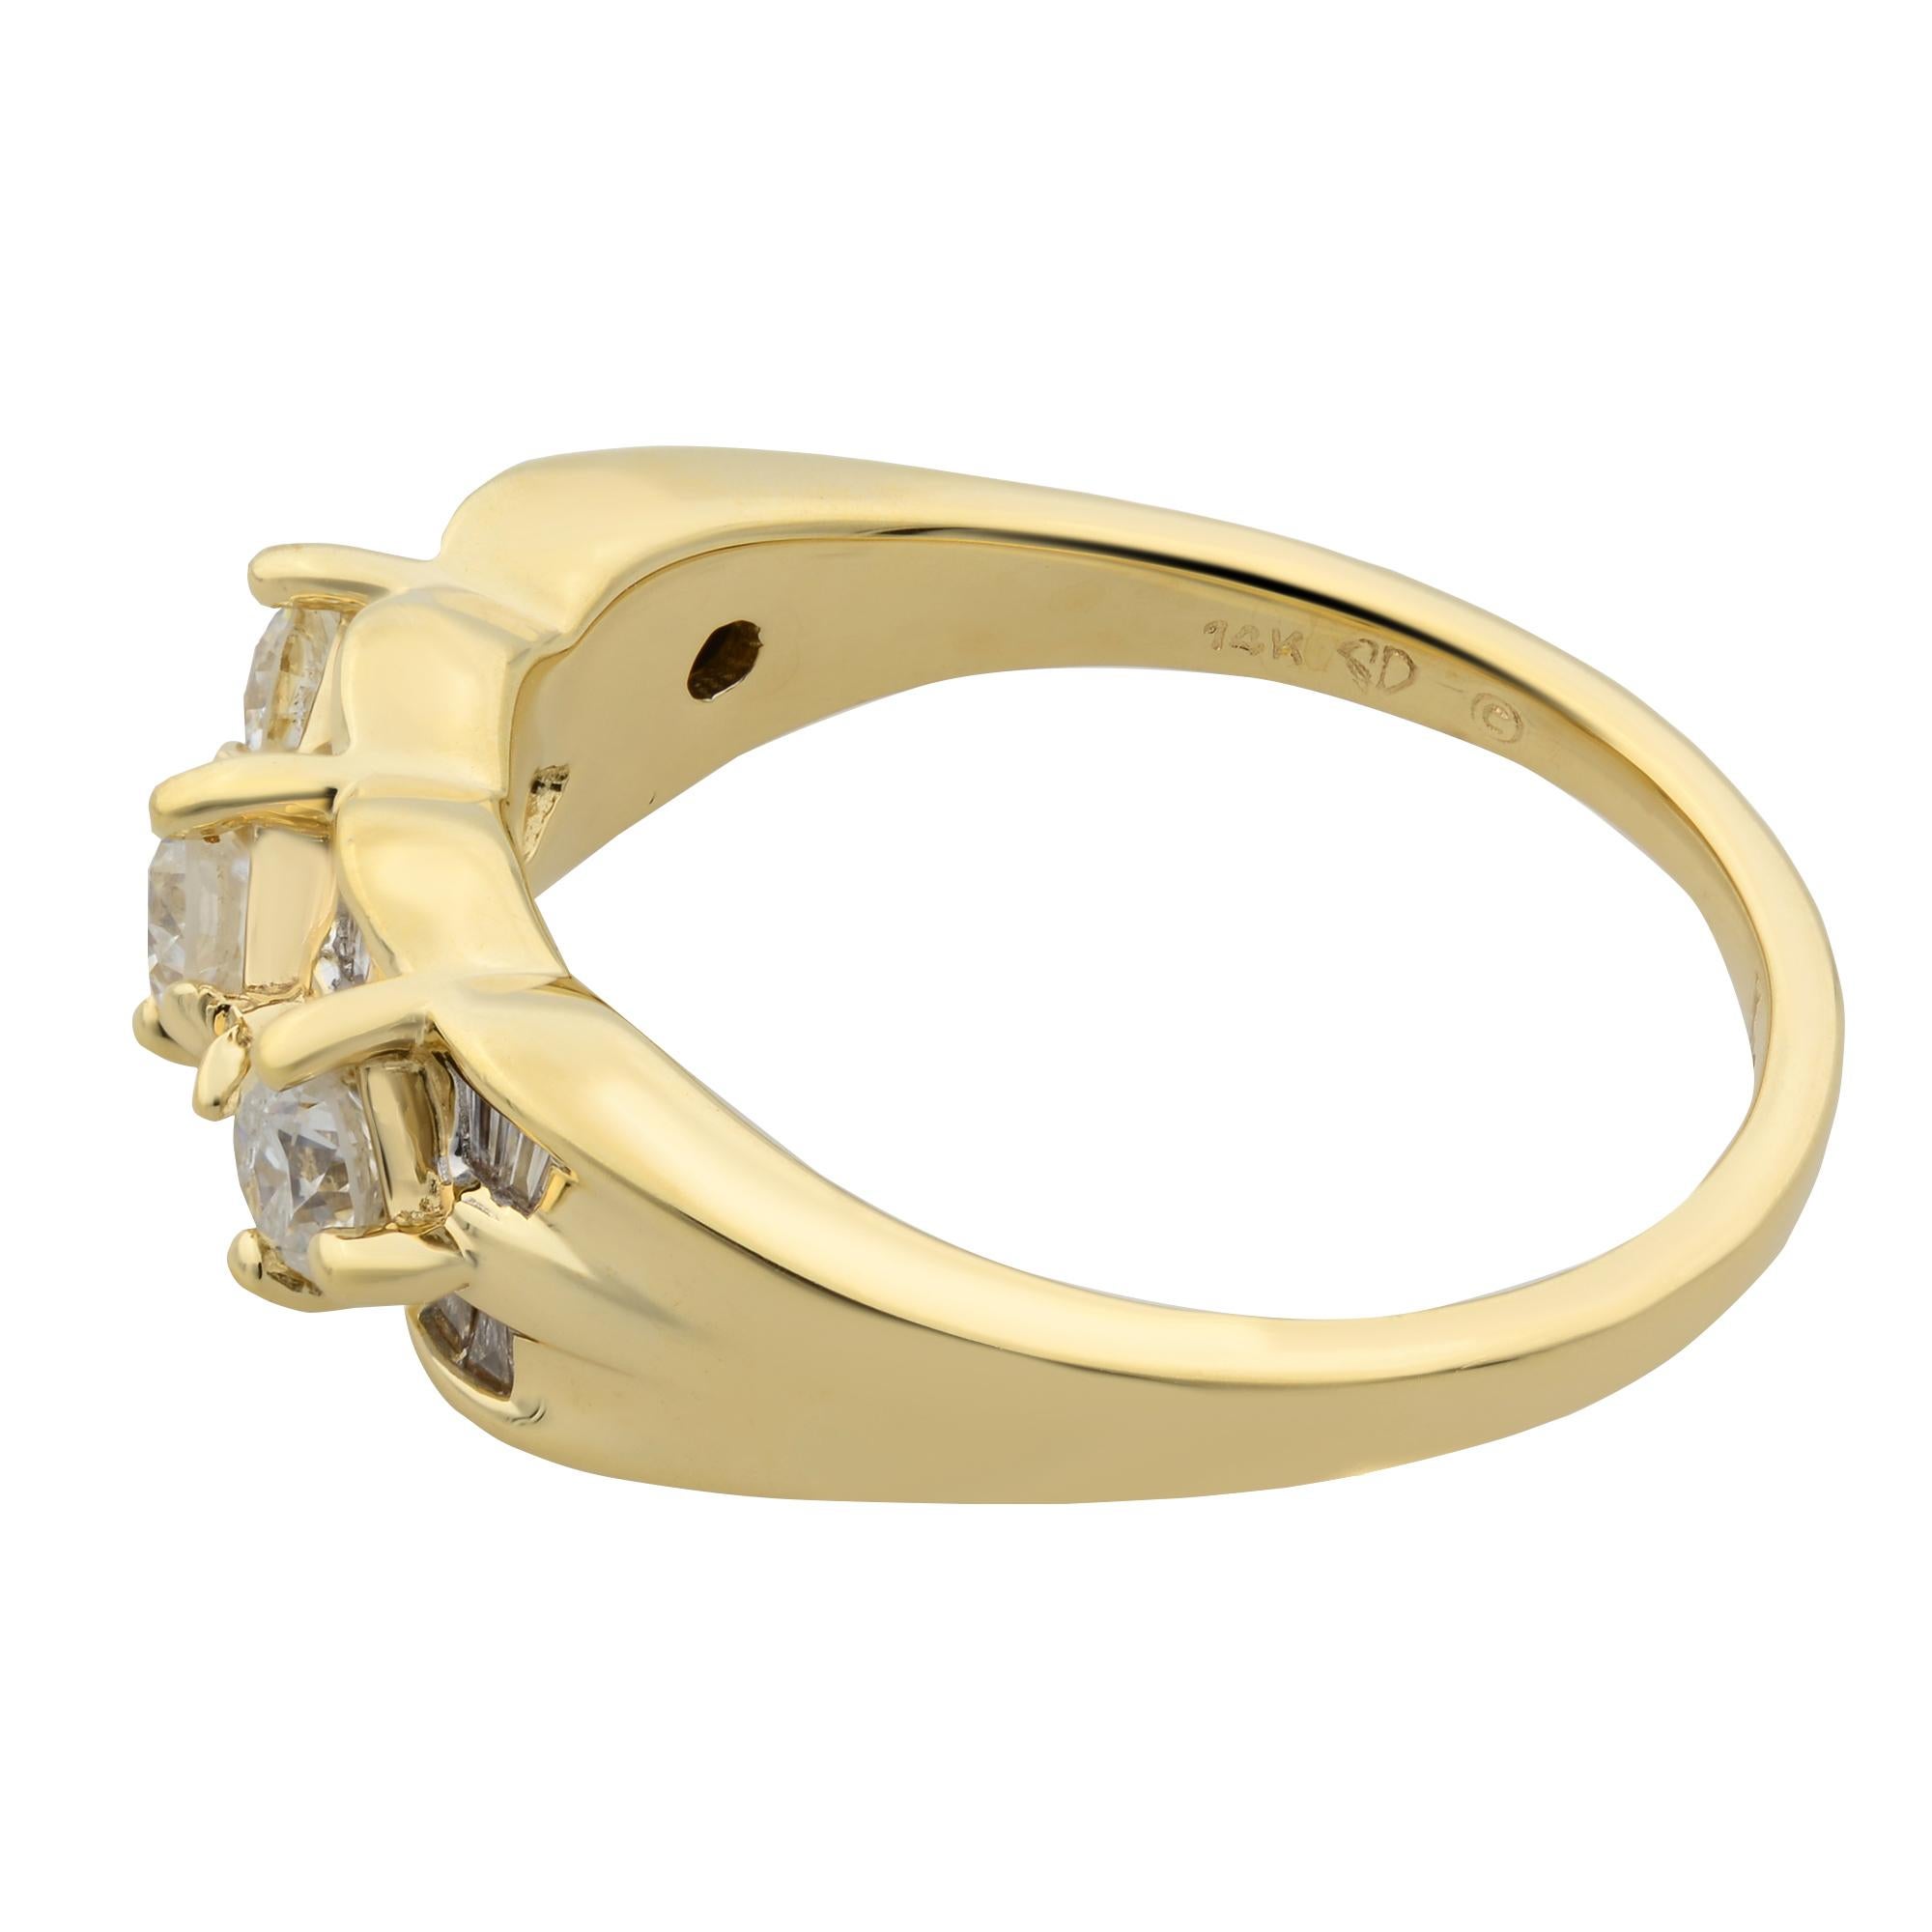 Baguette Cut Rachel Koen Diamond Ladies Ring 14K Yellow Gold 0.62cttw For Sale